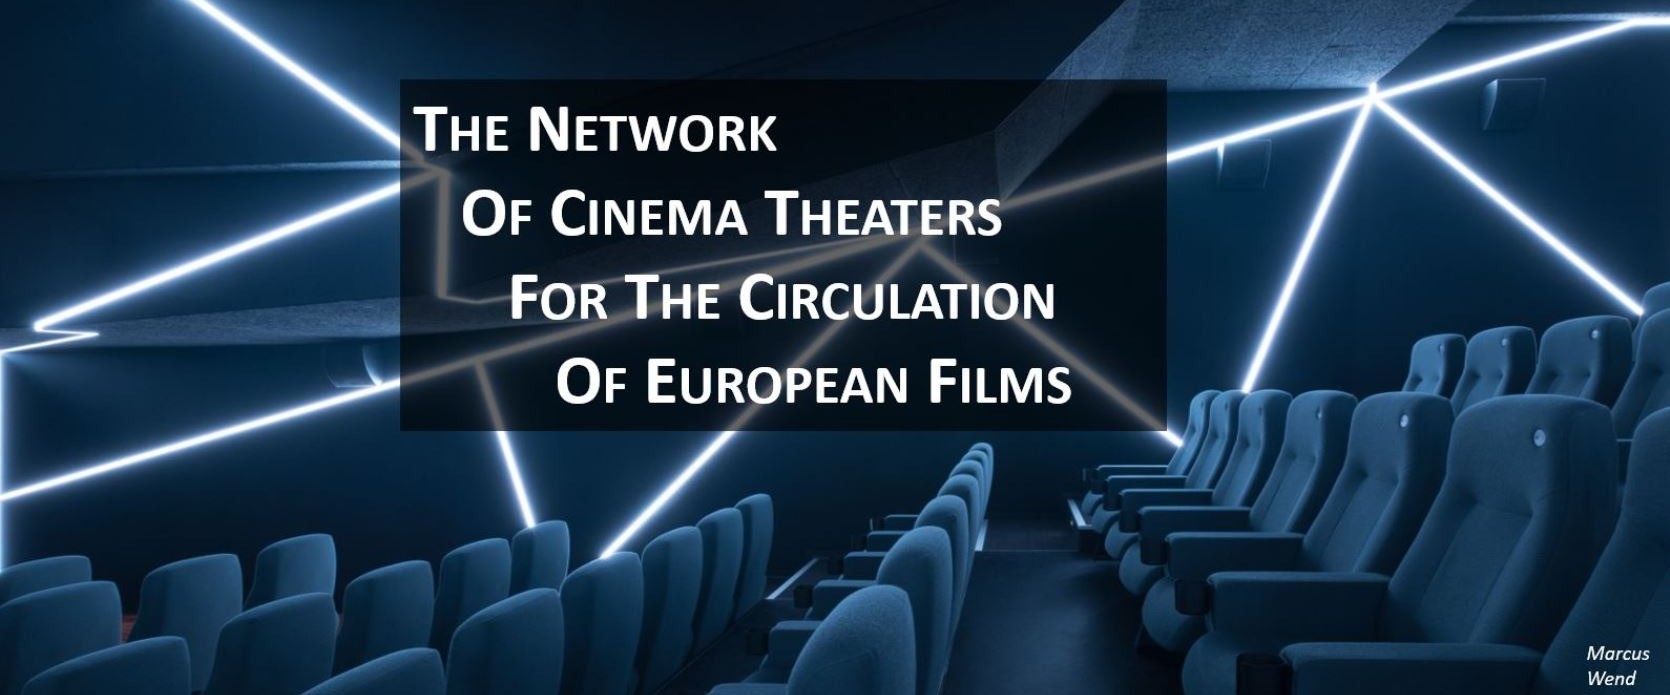 Europa Cinema